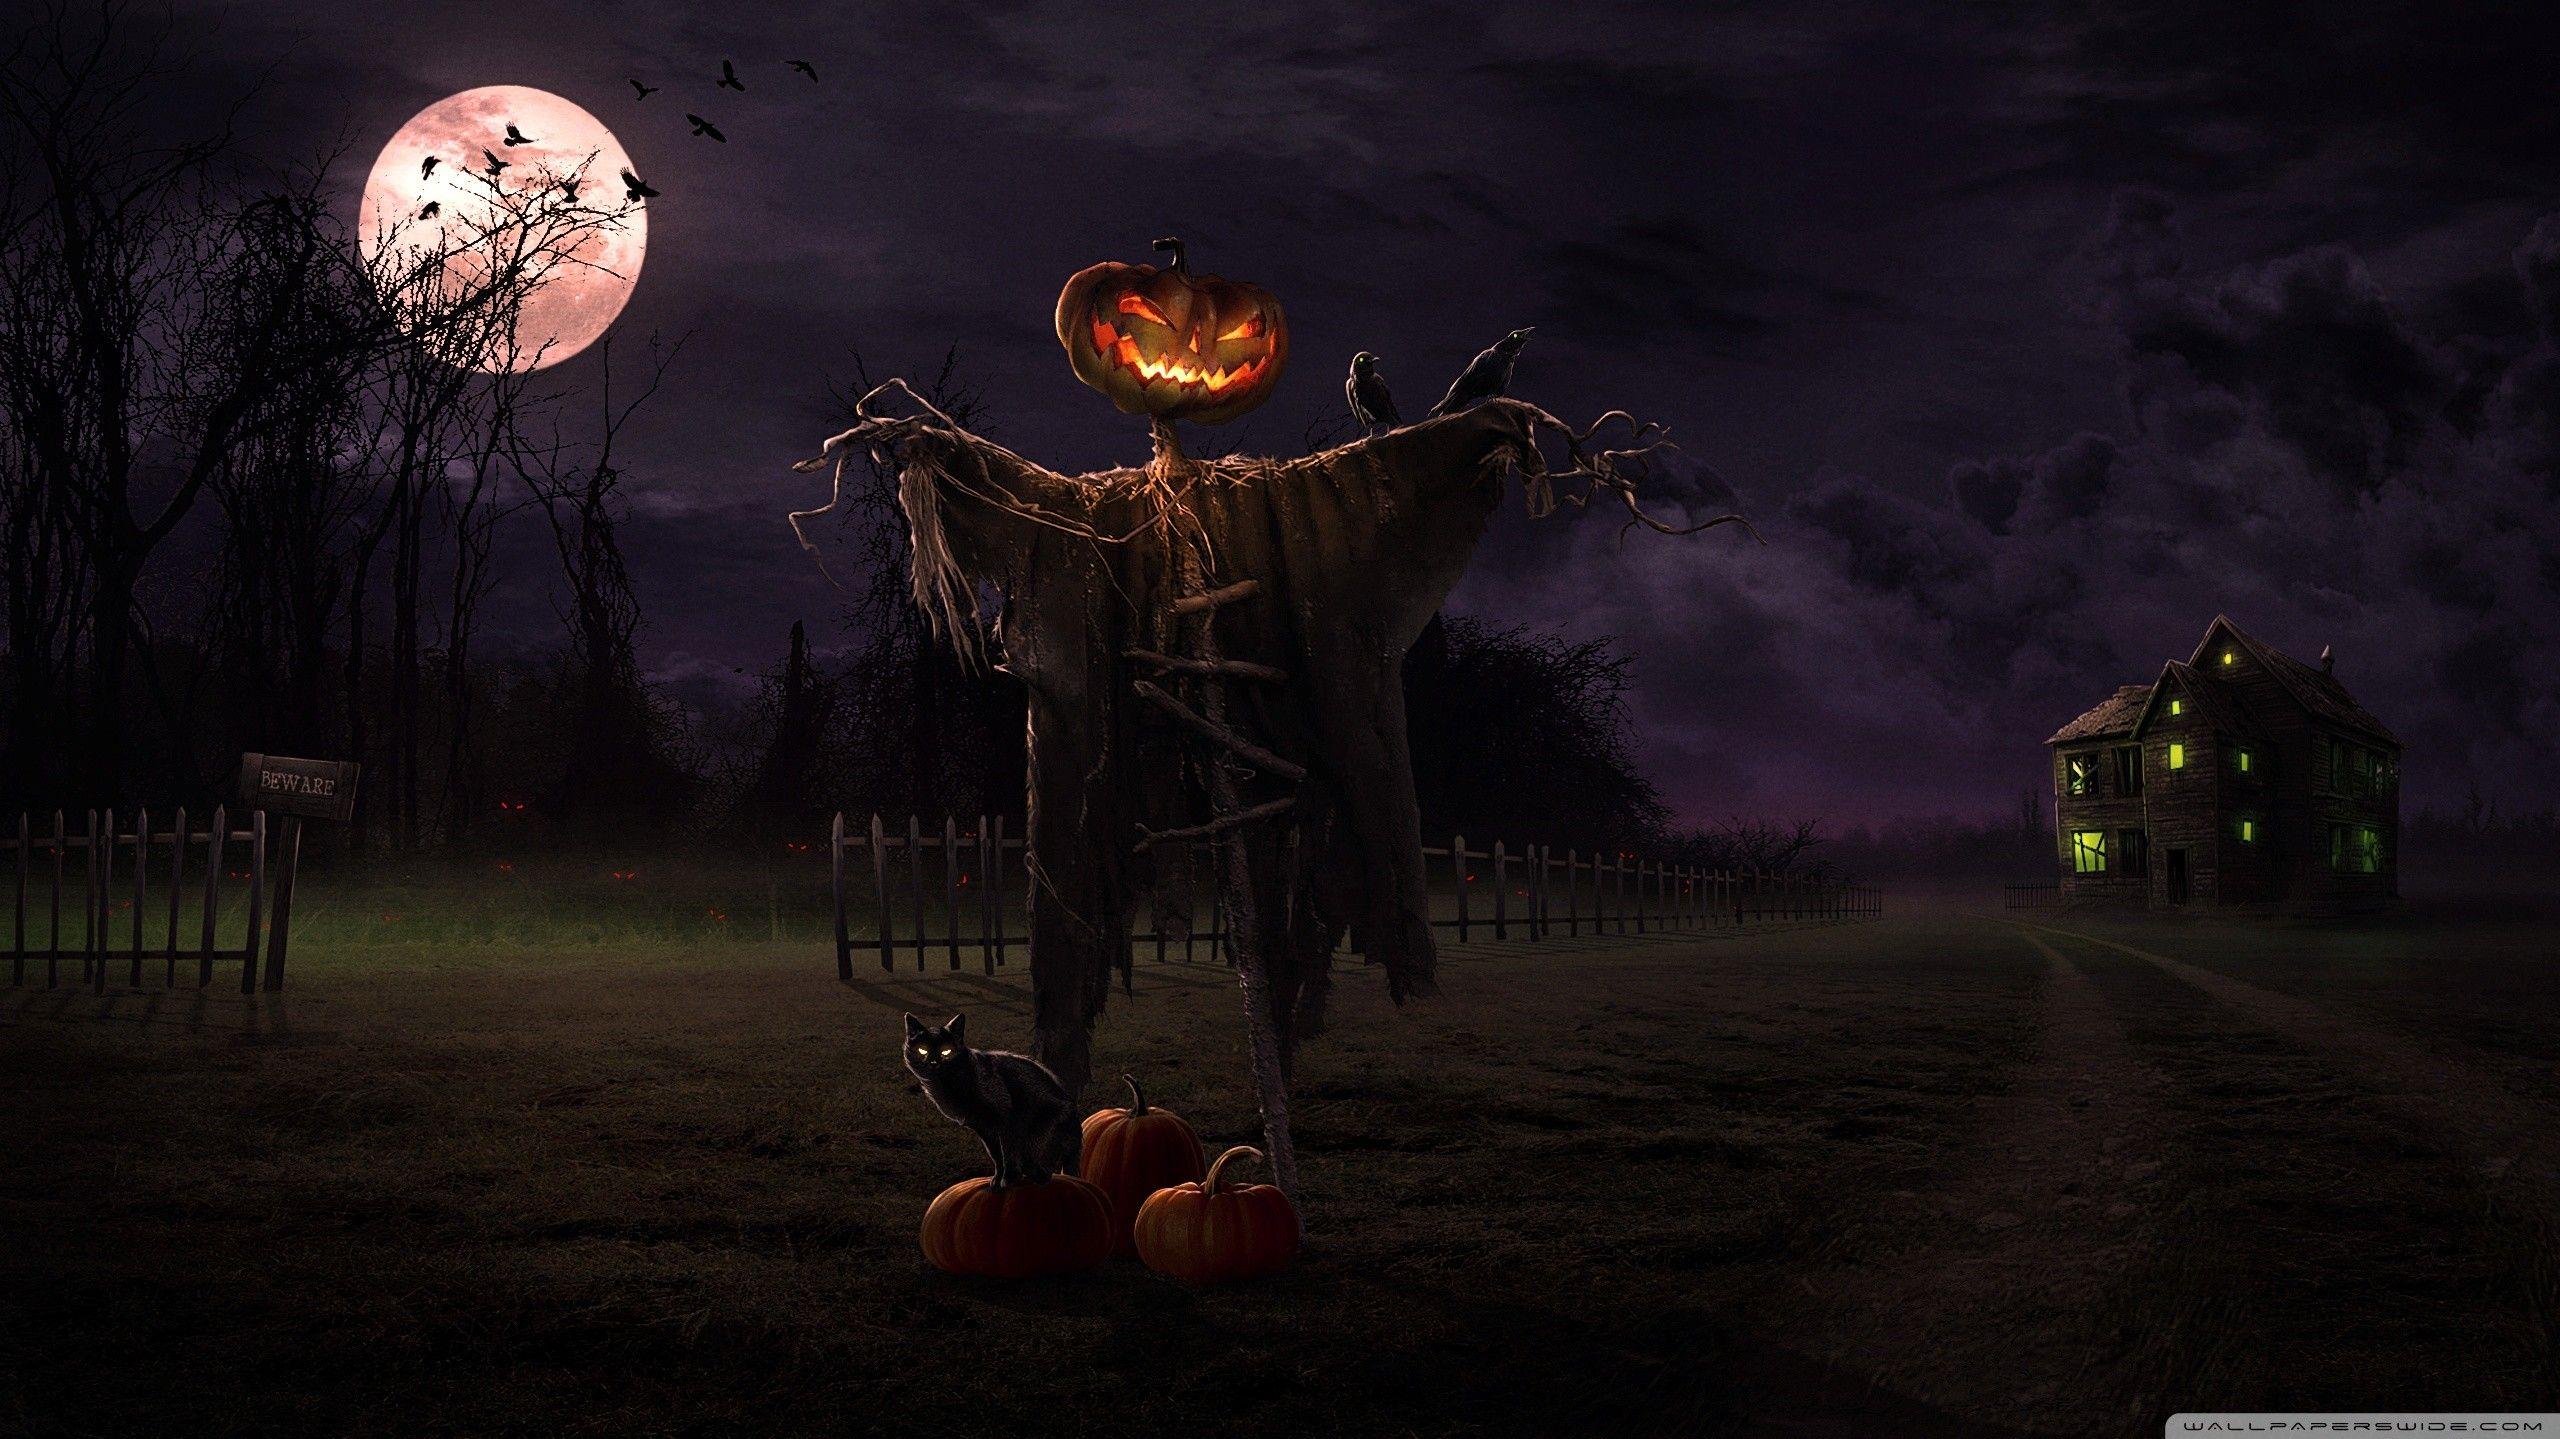 Scary Halloween Desktop Background Pictures